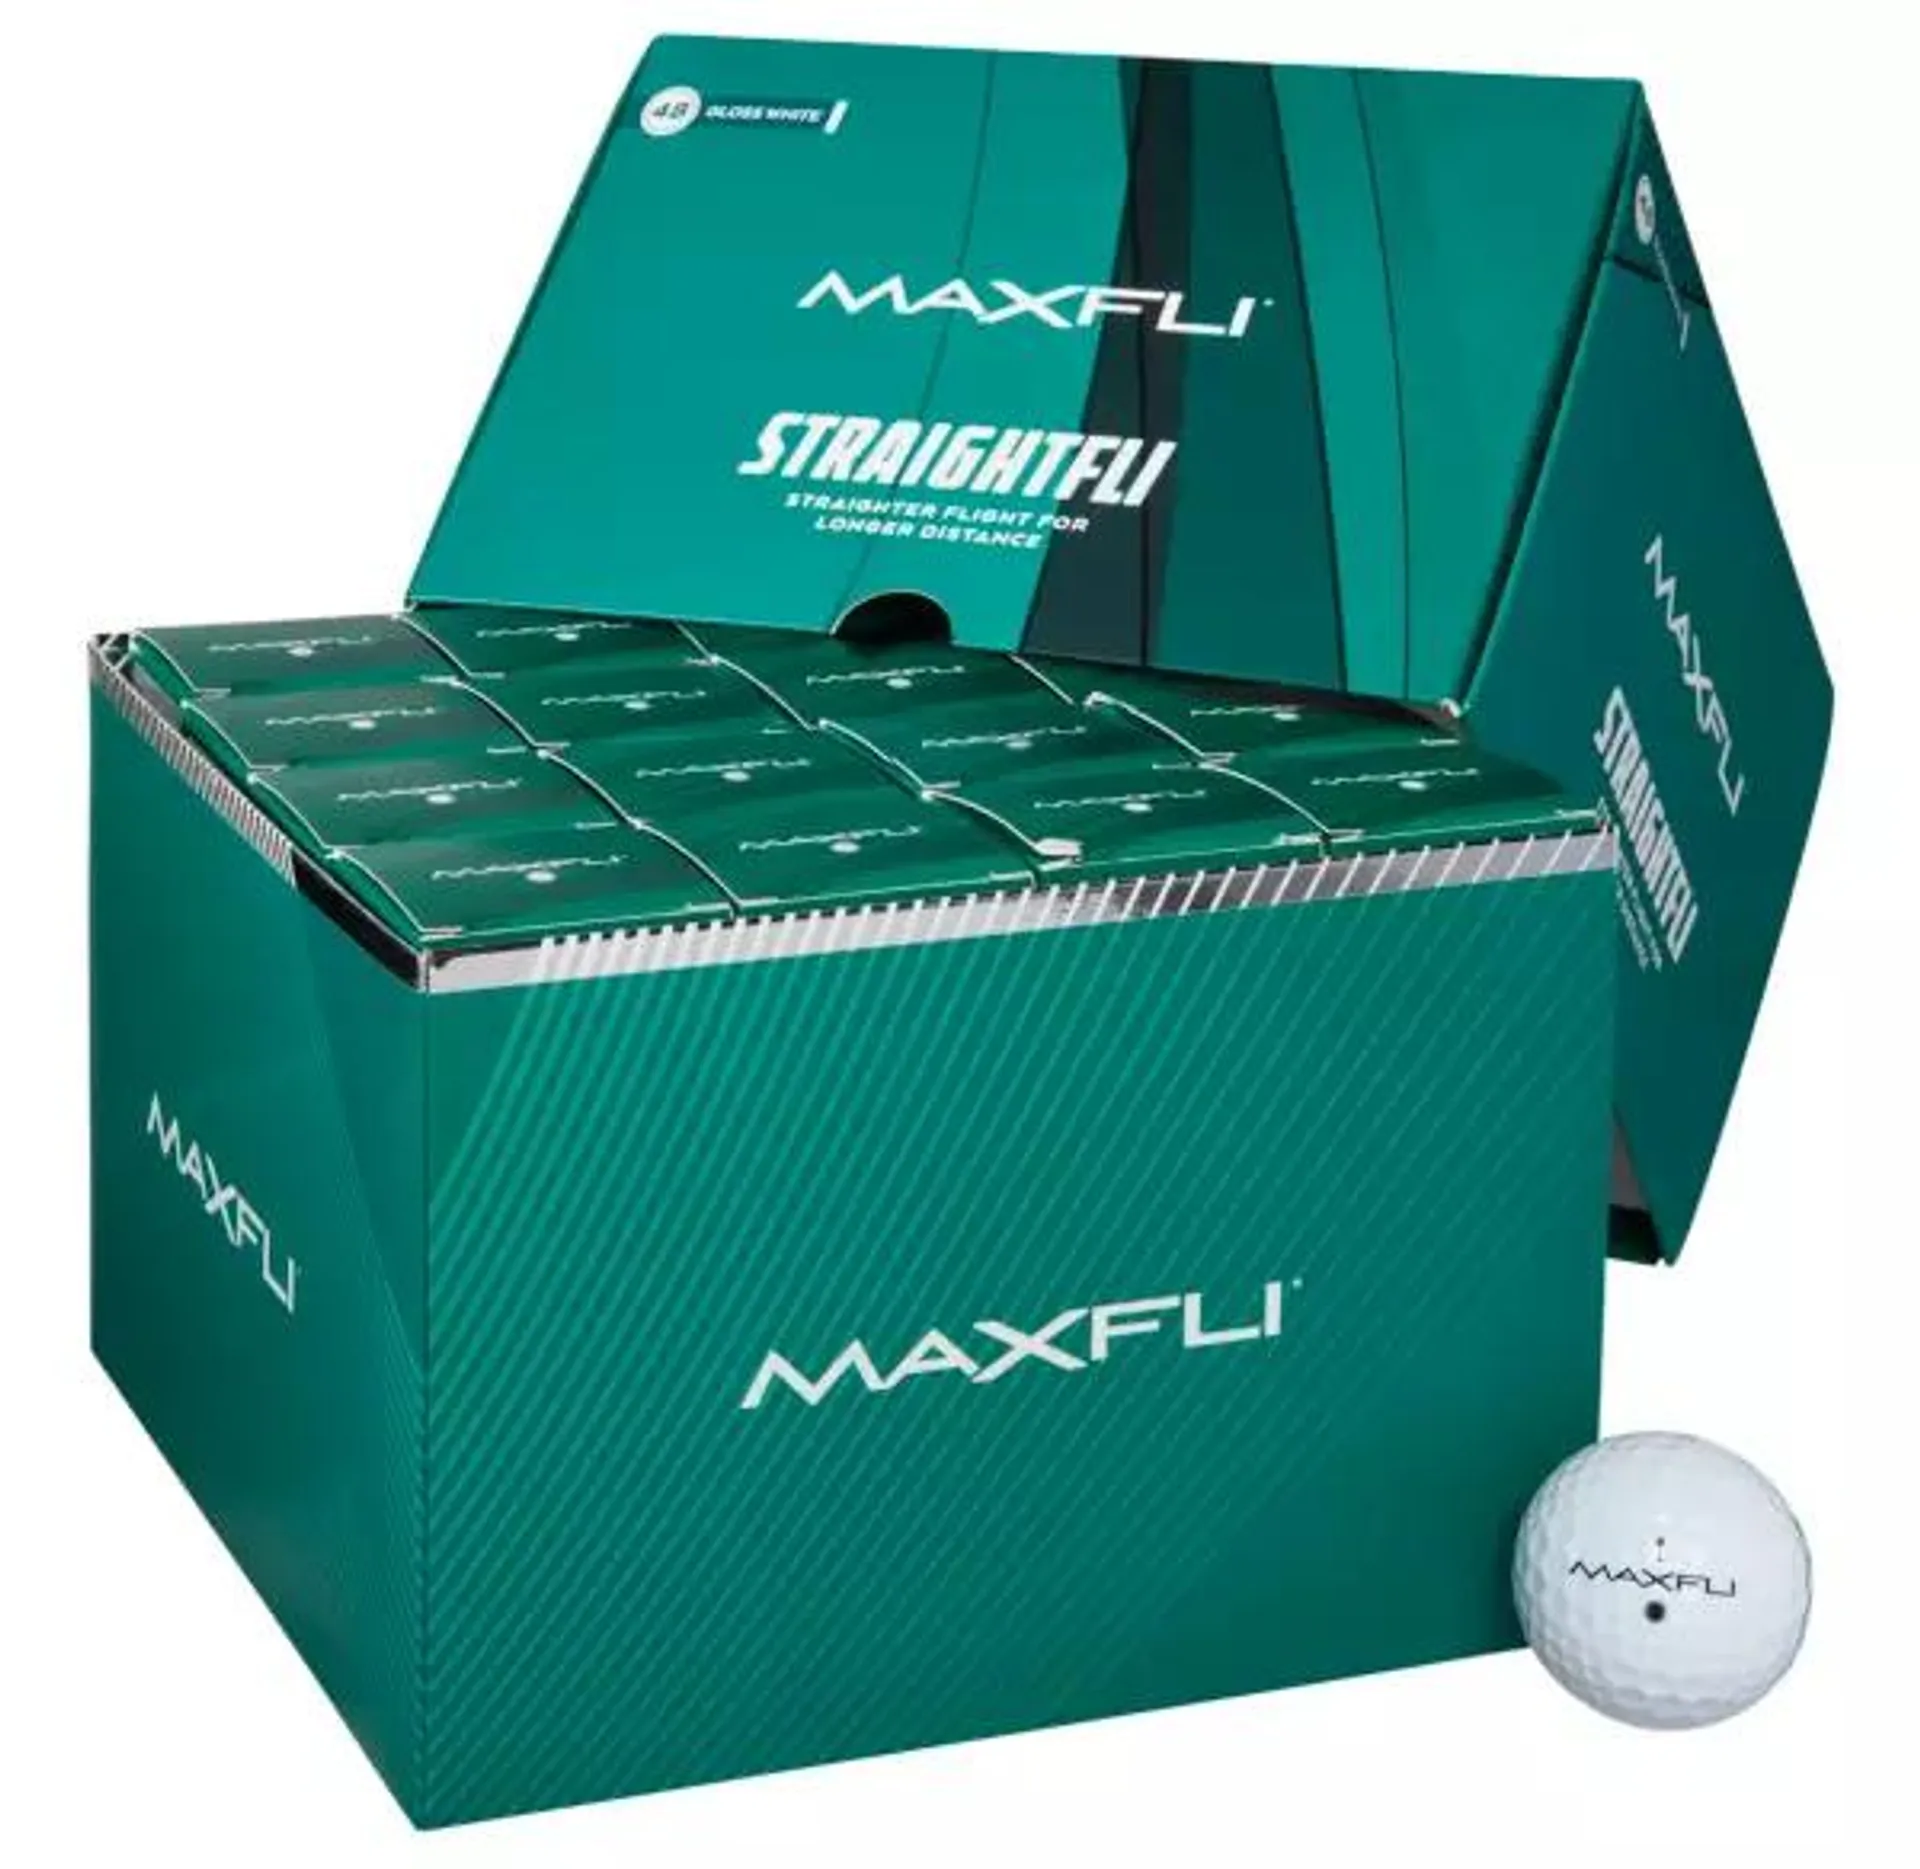 Maxfli 2023 Straightfli Golf Balls - 48 Pack